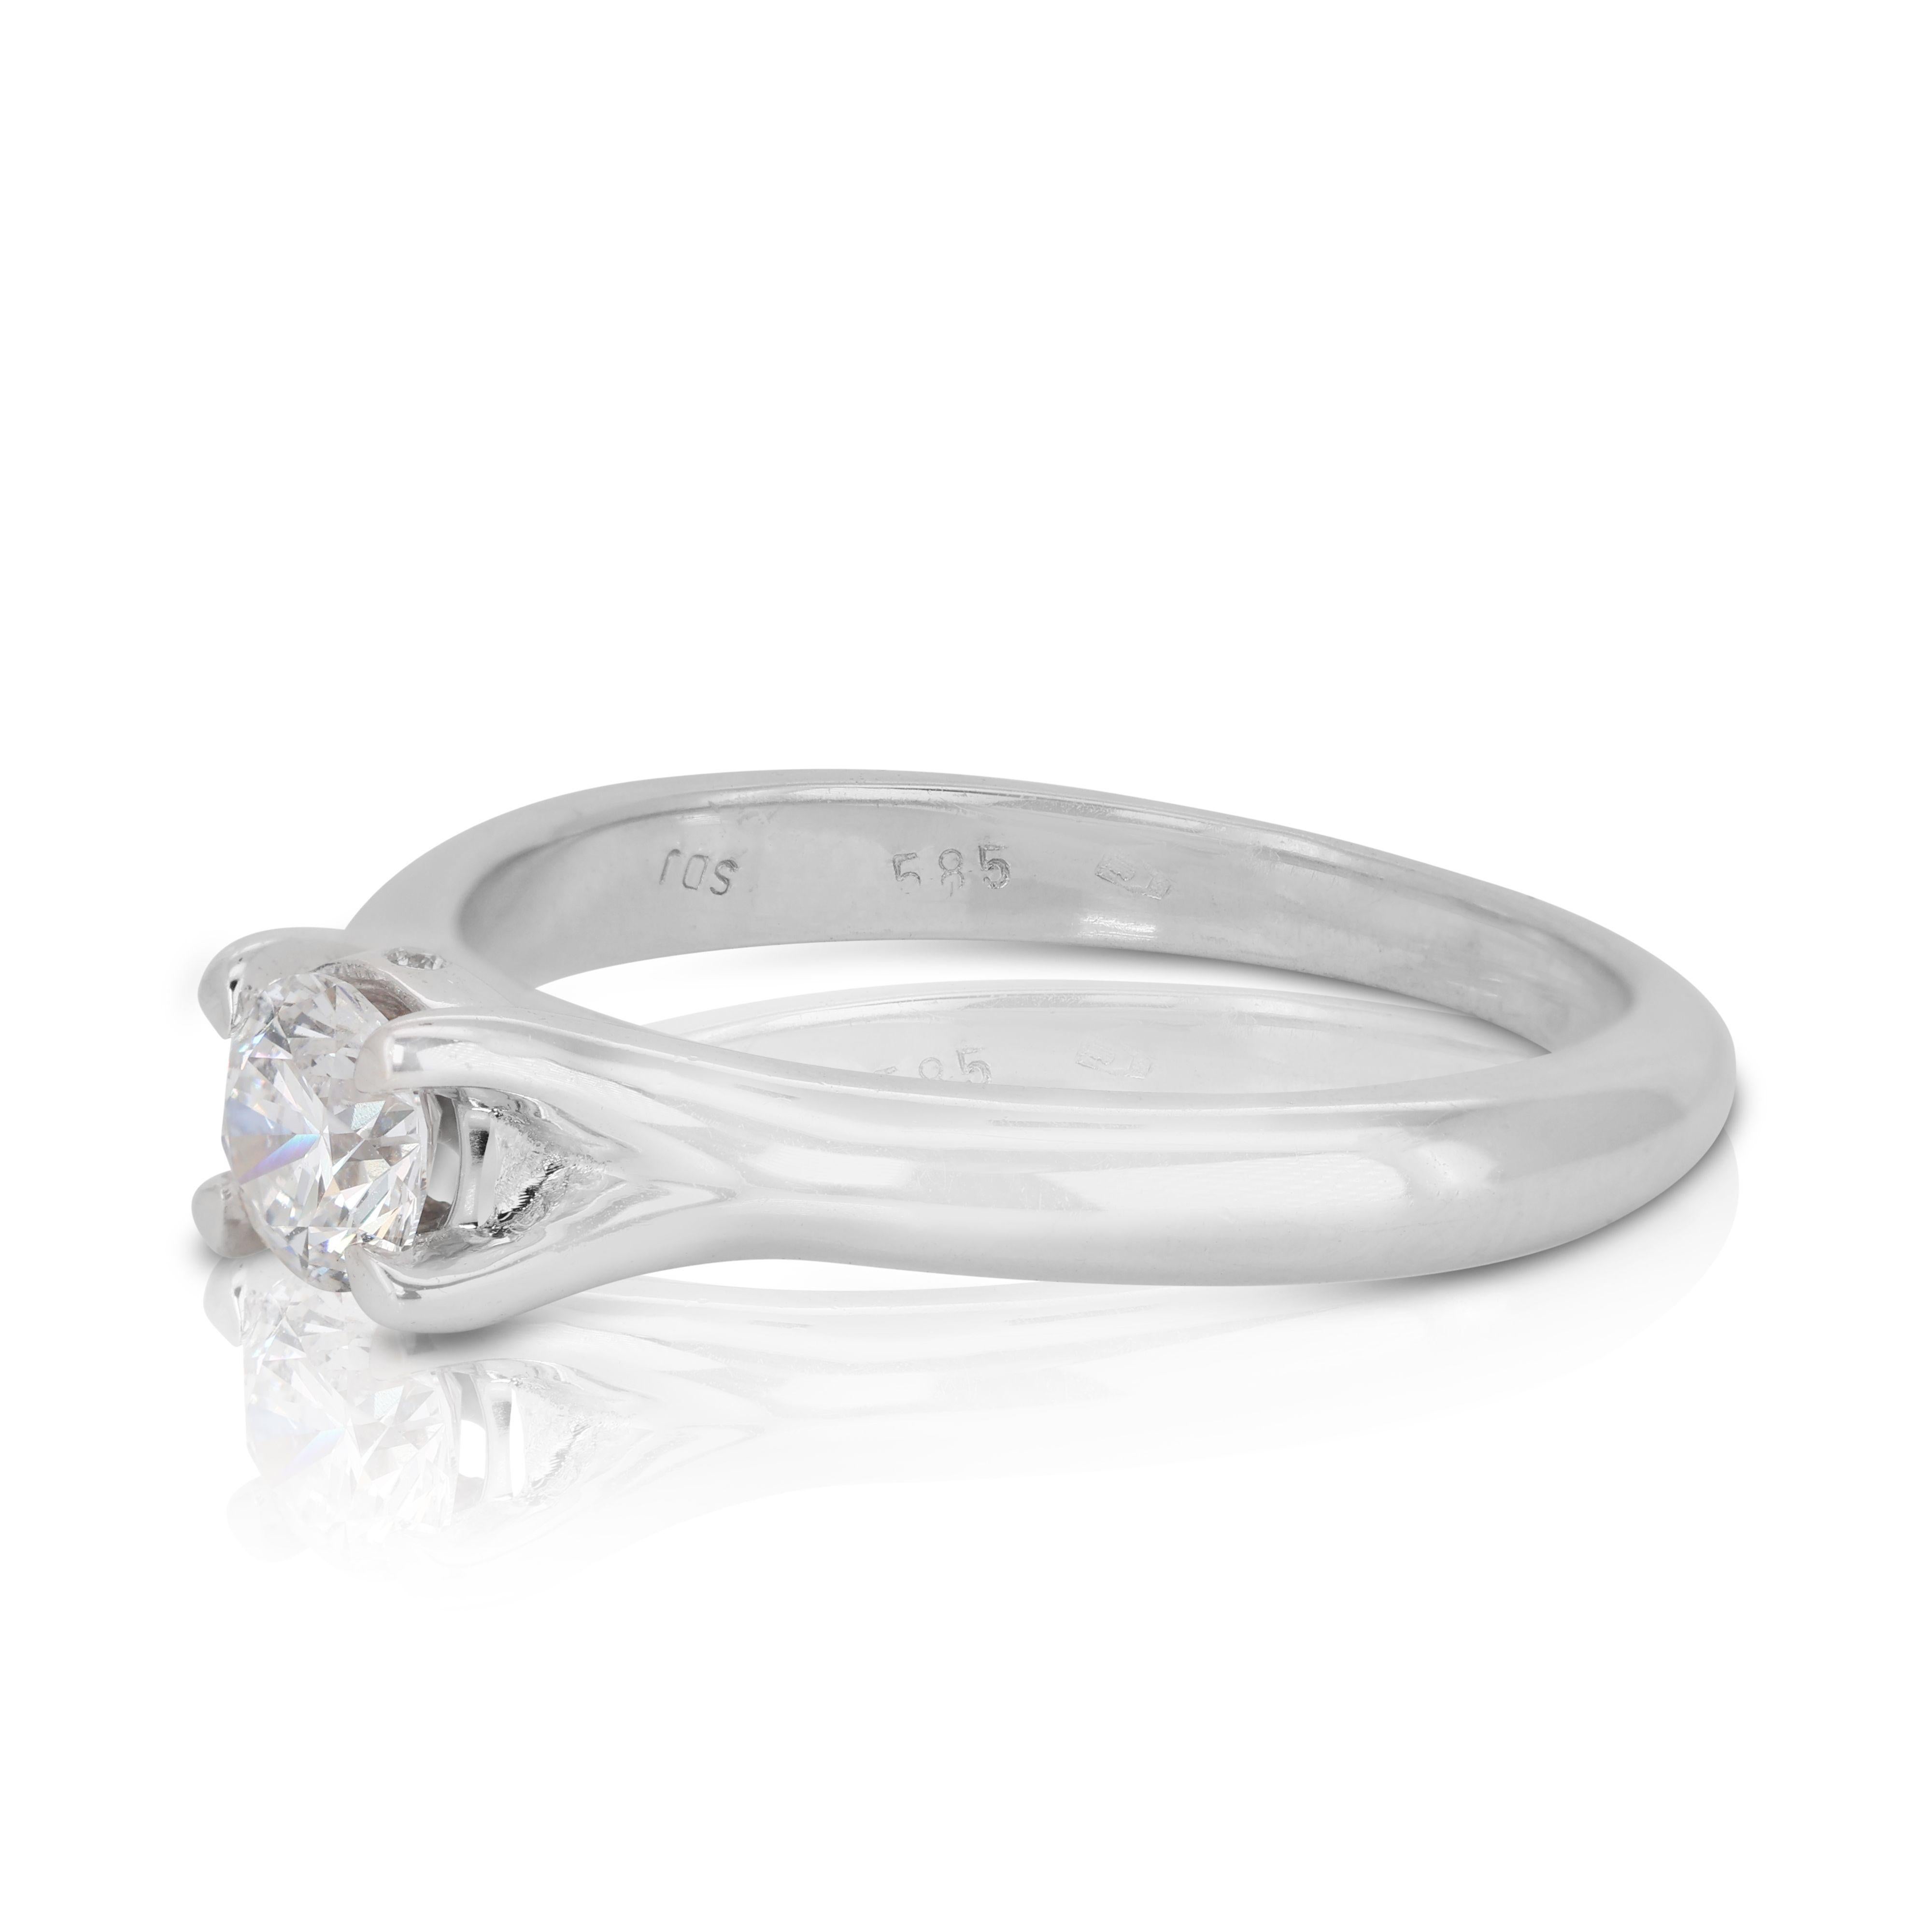 Classic 14K White Gold Solitaire Ring with 0.35ct Natural DiamondsDianoche Pte L Pour femmes en vente